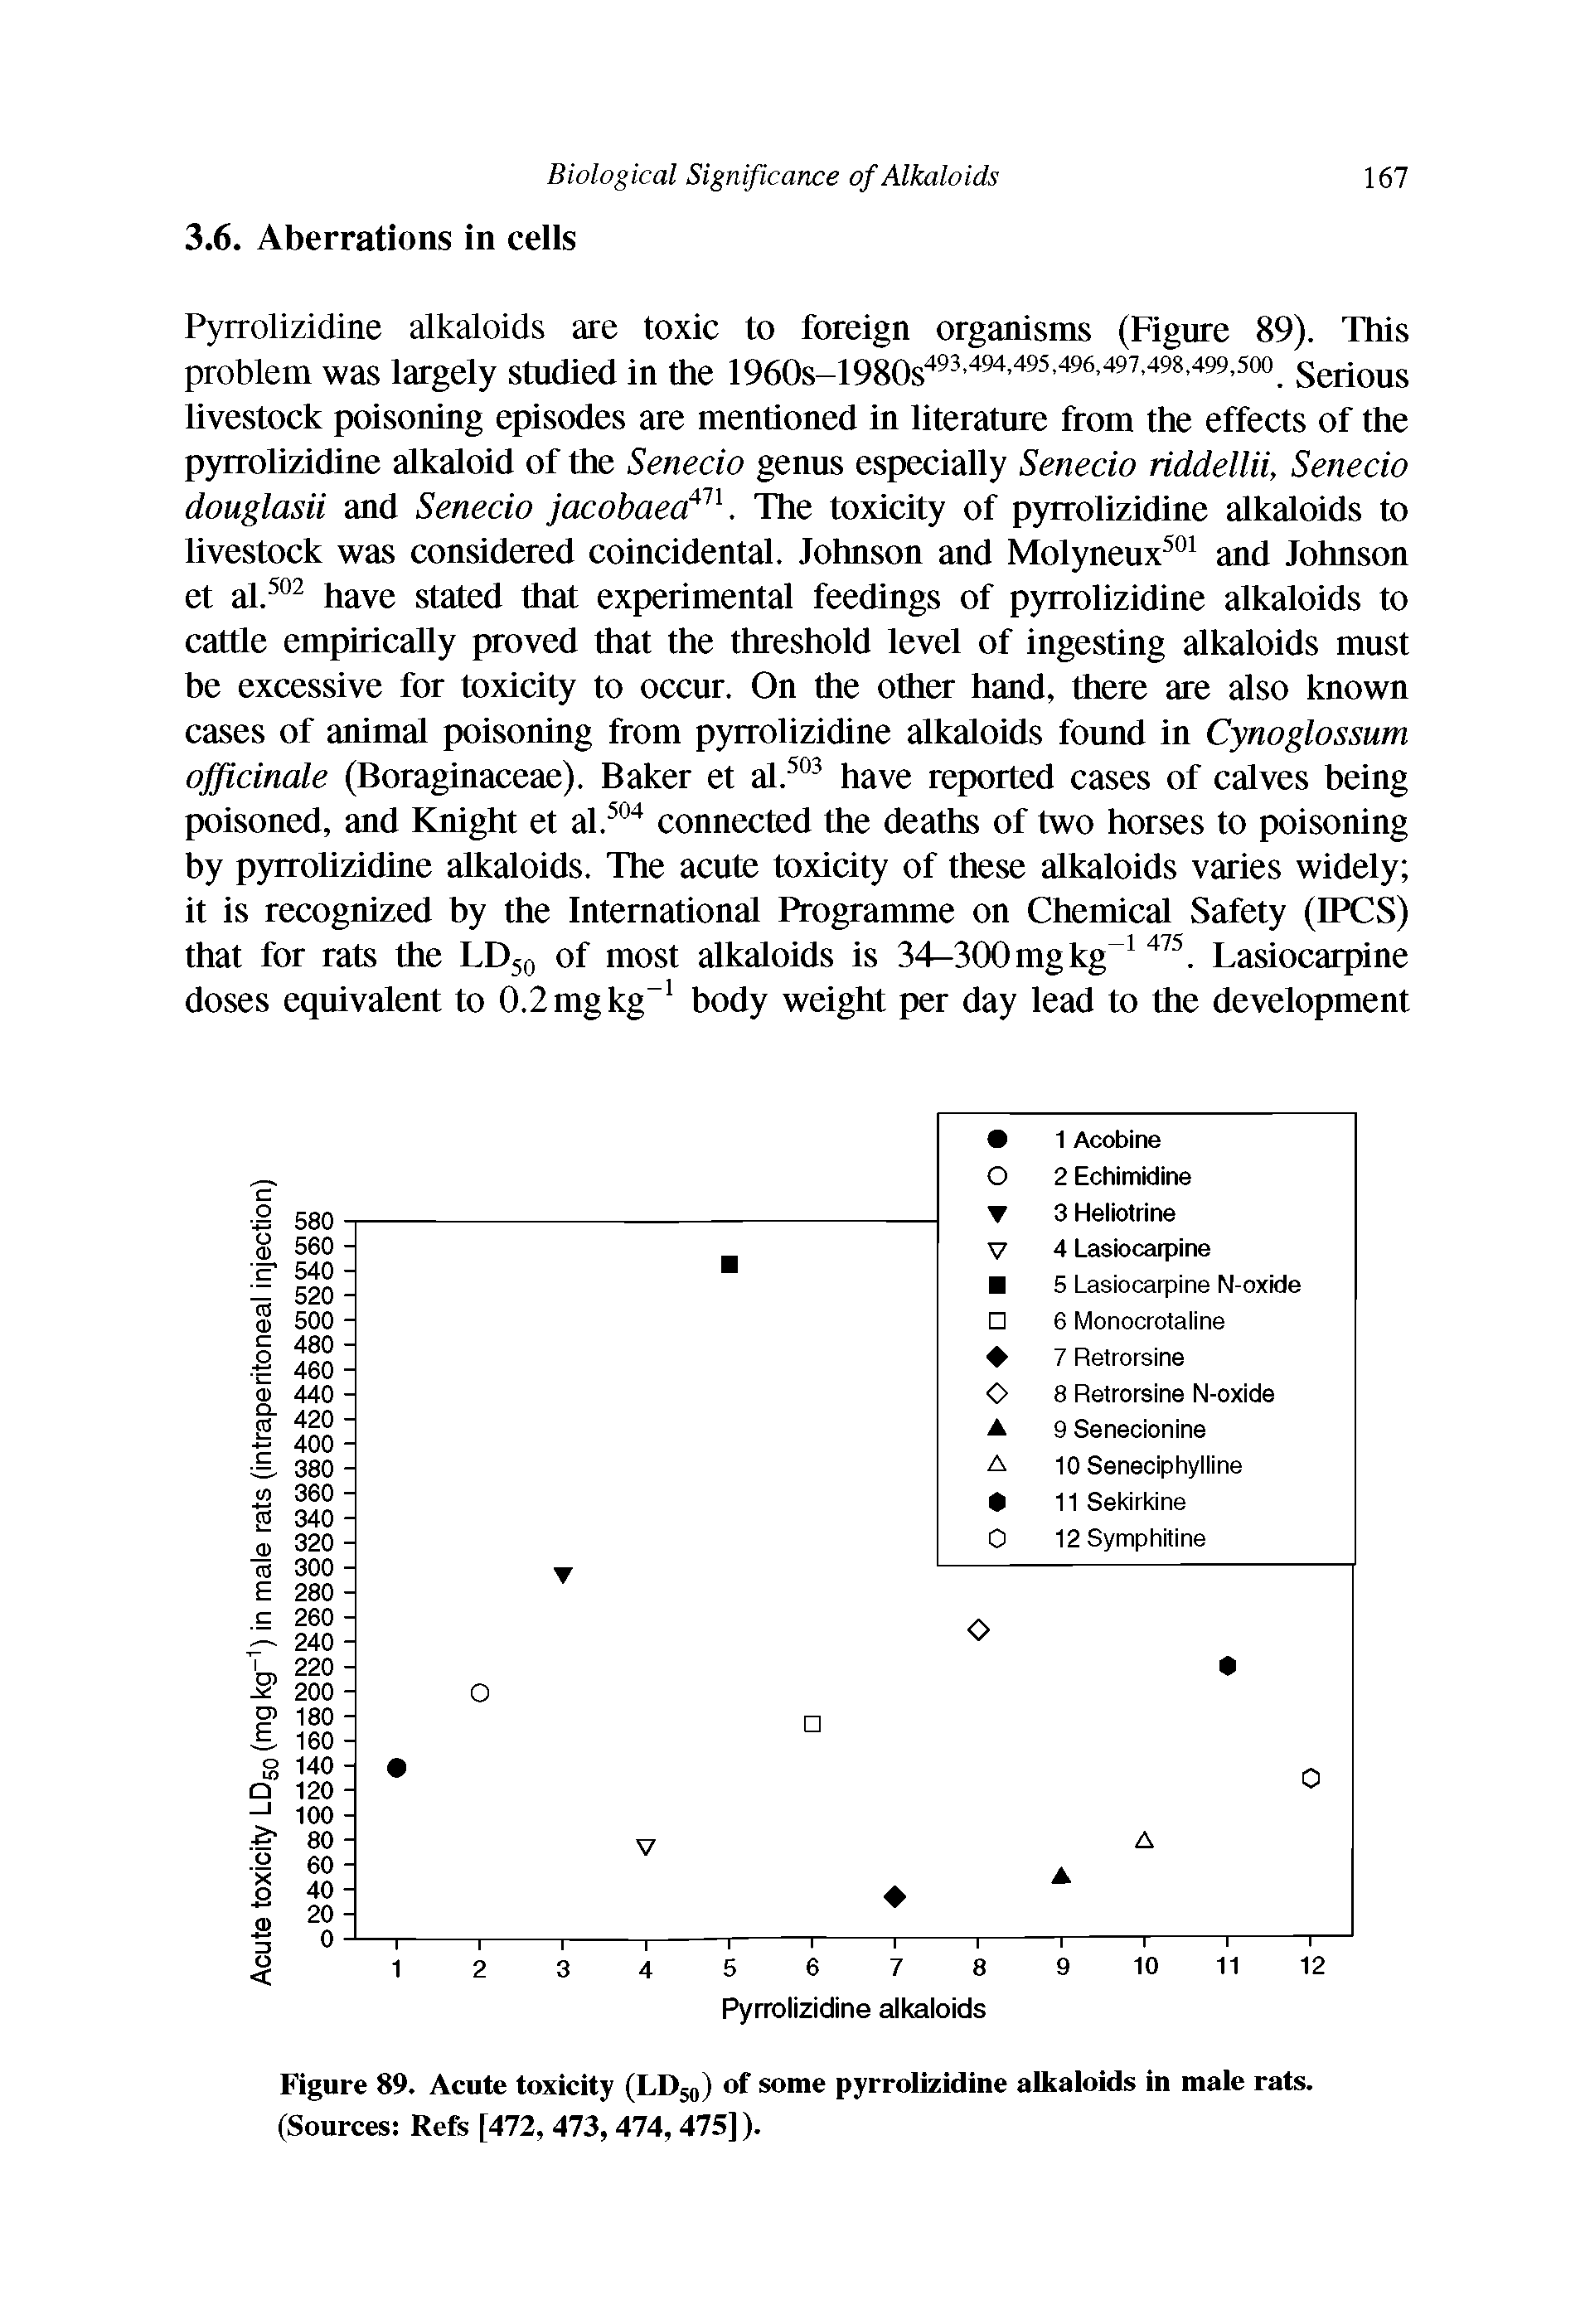 Figure 89. Acute toxicity (LD50) of some pyrrolizidine alkaloids in male rats. (Sources Refs [472, 473, 474, 475]).